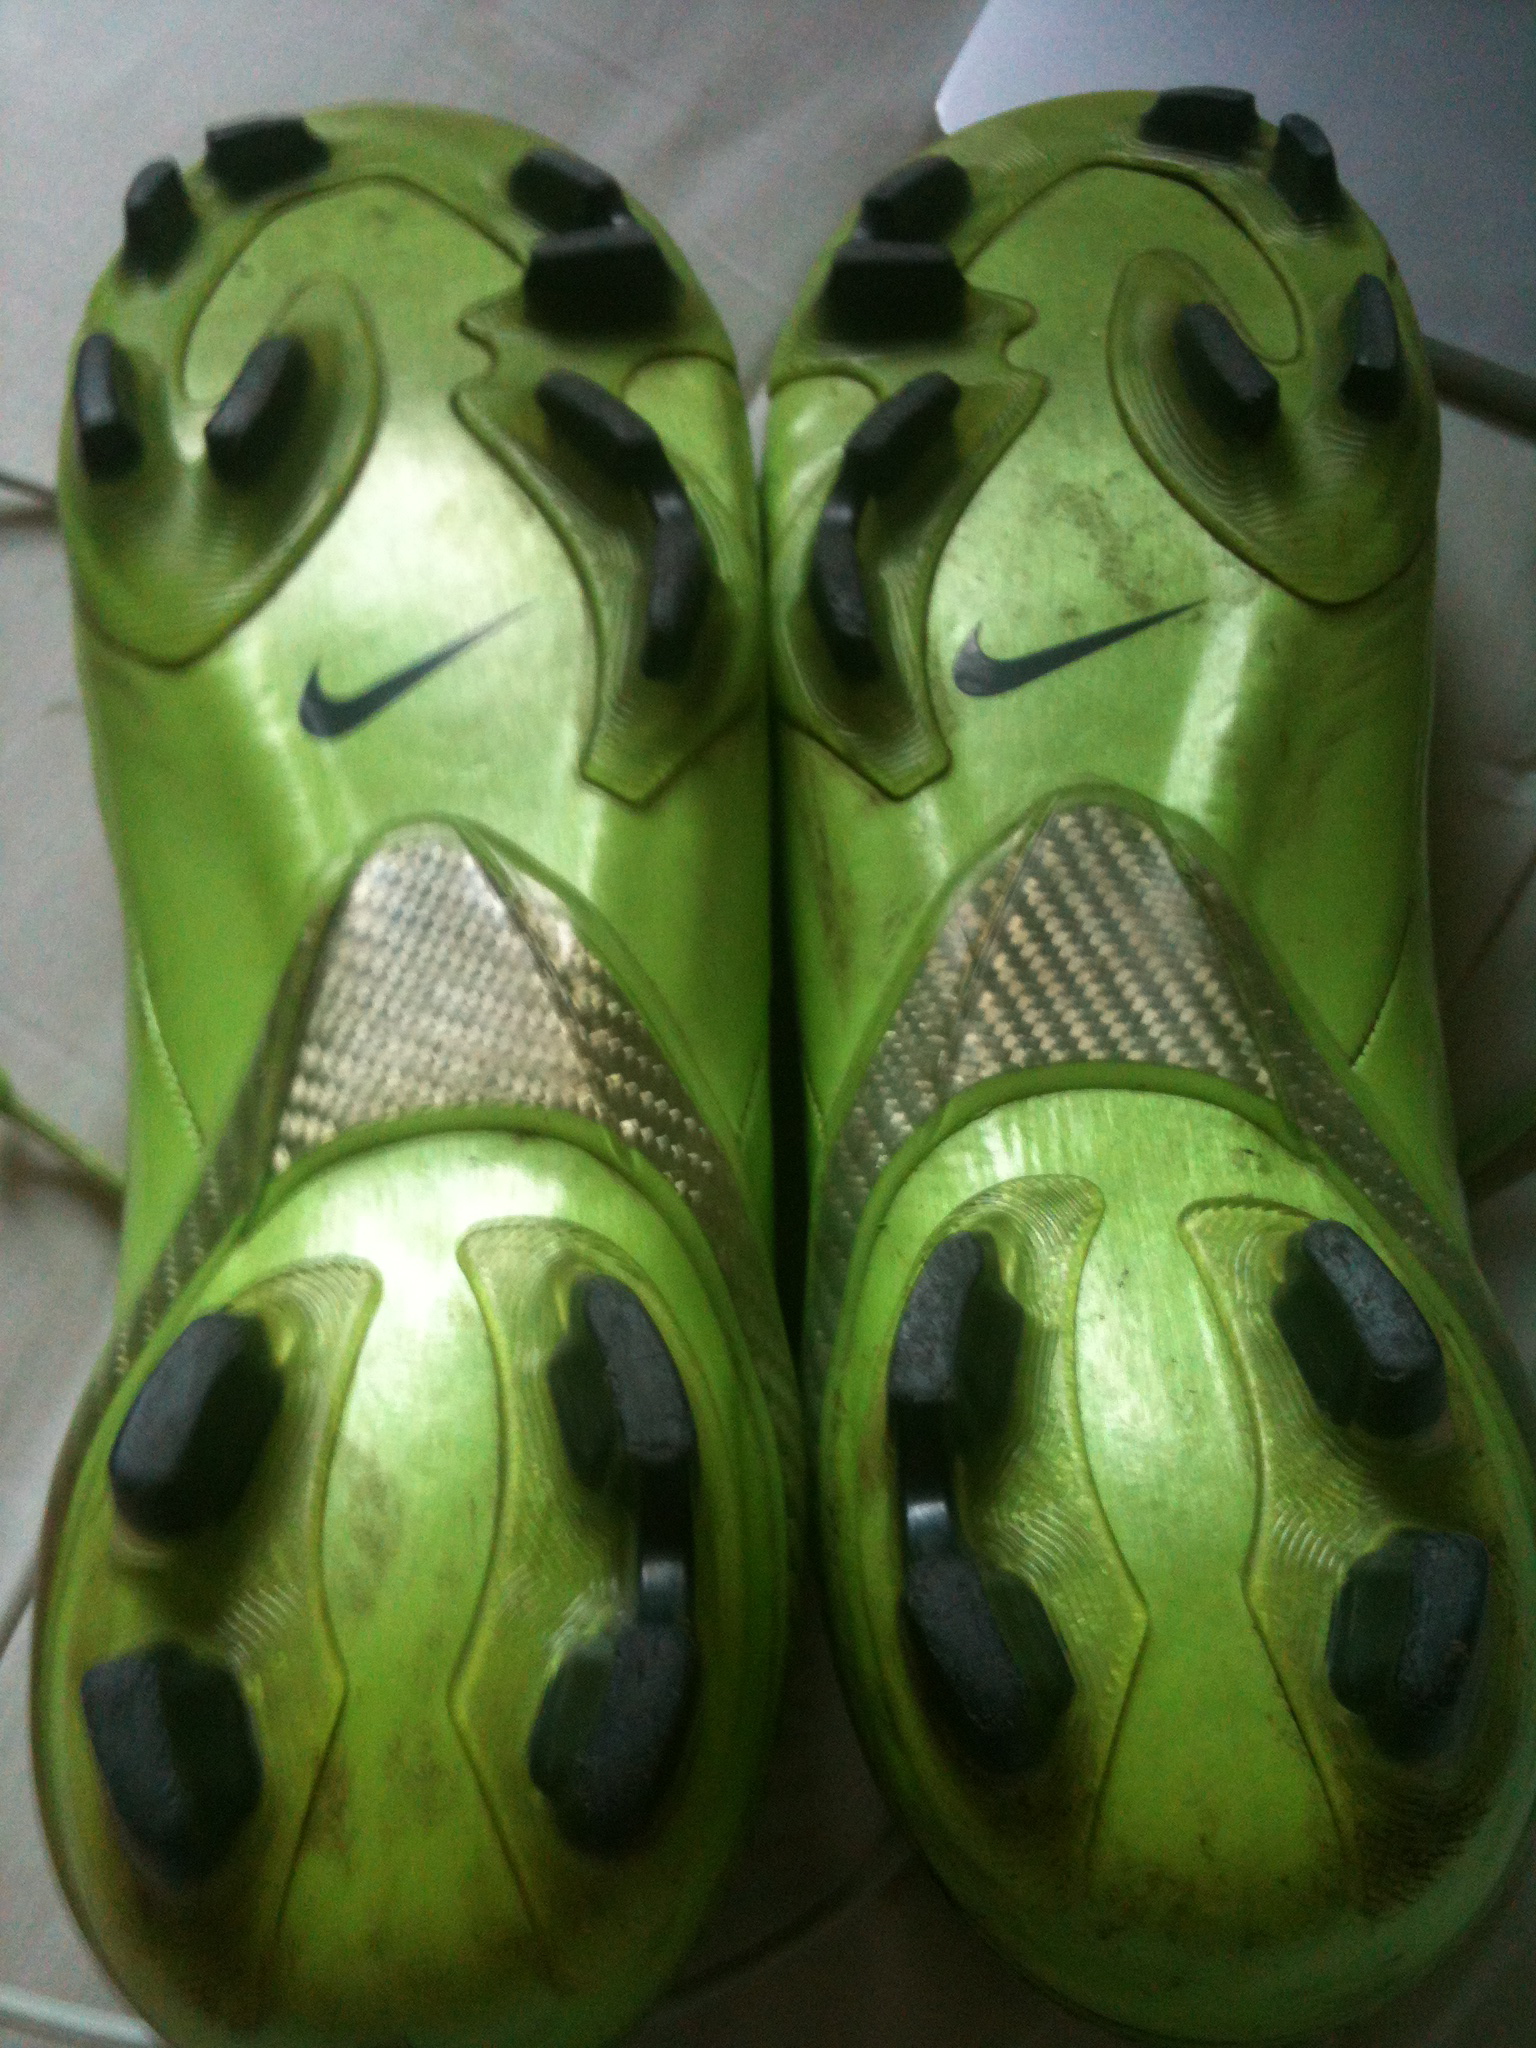 New Nike Mercurial Vapor 12 XII Pro TF Turf Soccer Shoes